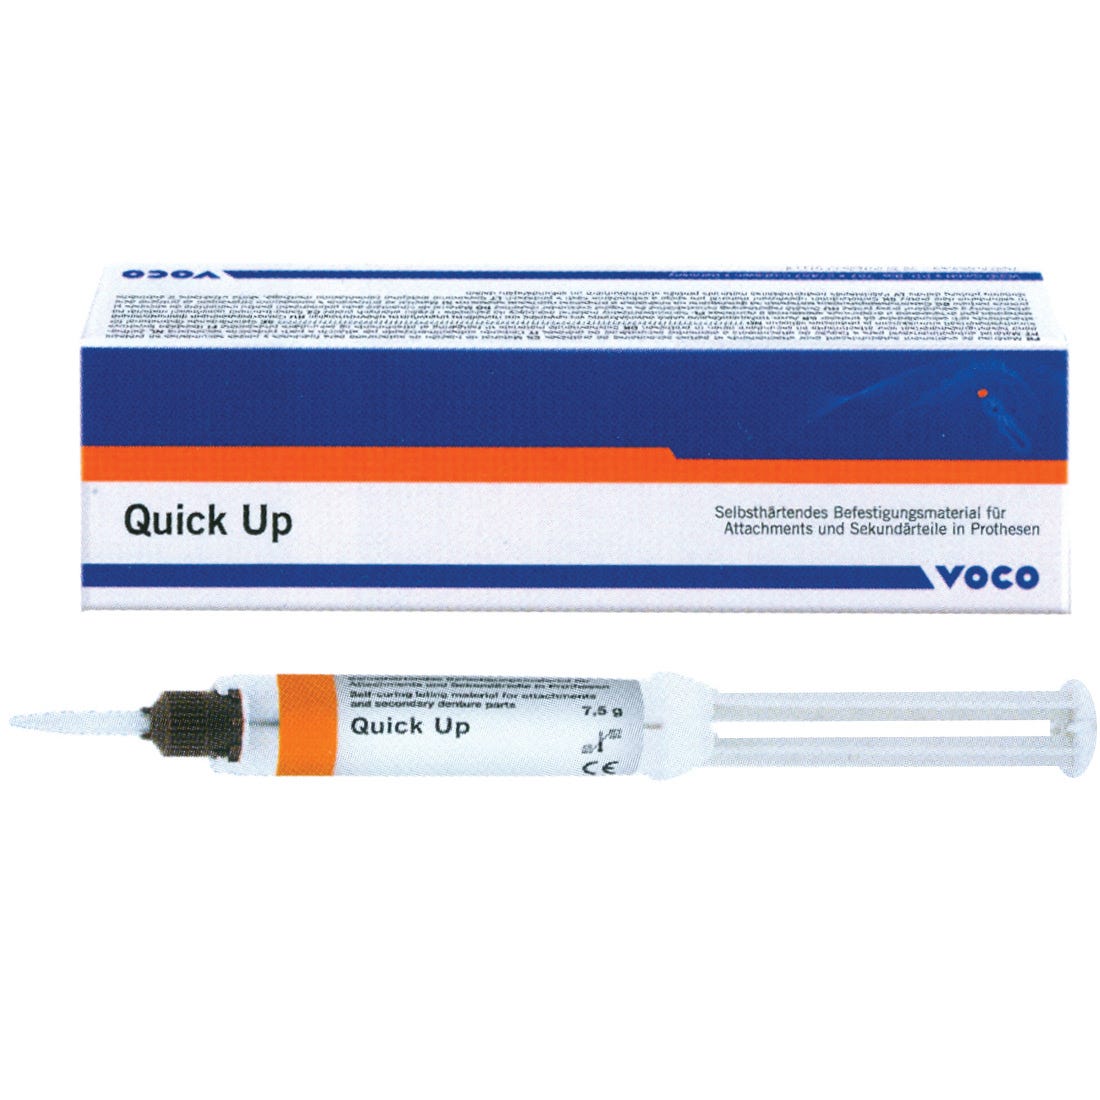 7.5gram Quick Up QuickMix Syringe, Type 10 mixing tips